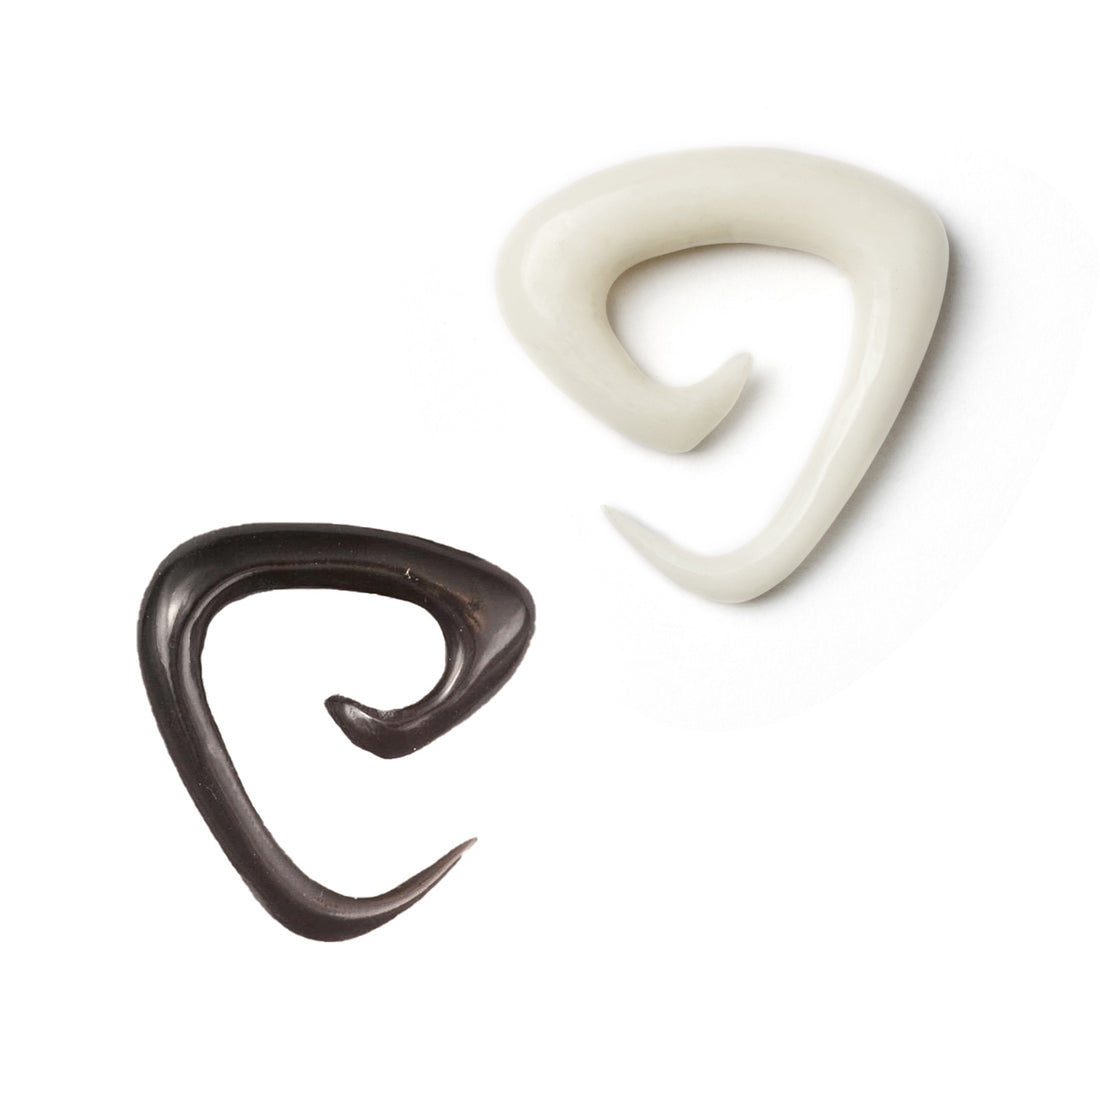 Triangular Spiral Solid Horn Hook - Bone and horn